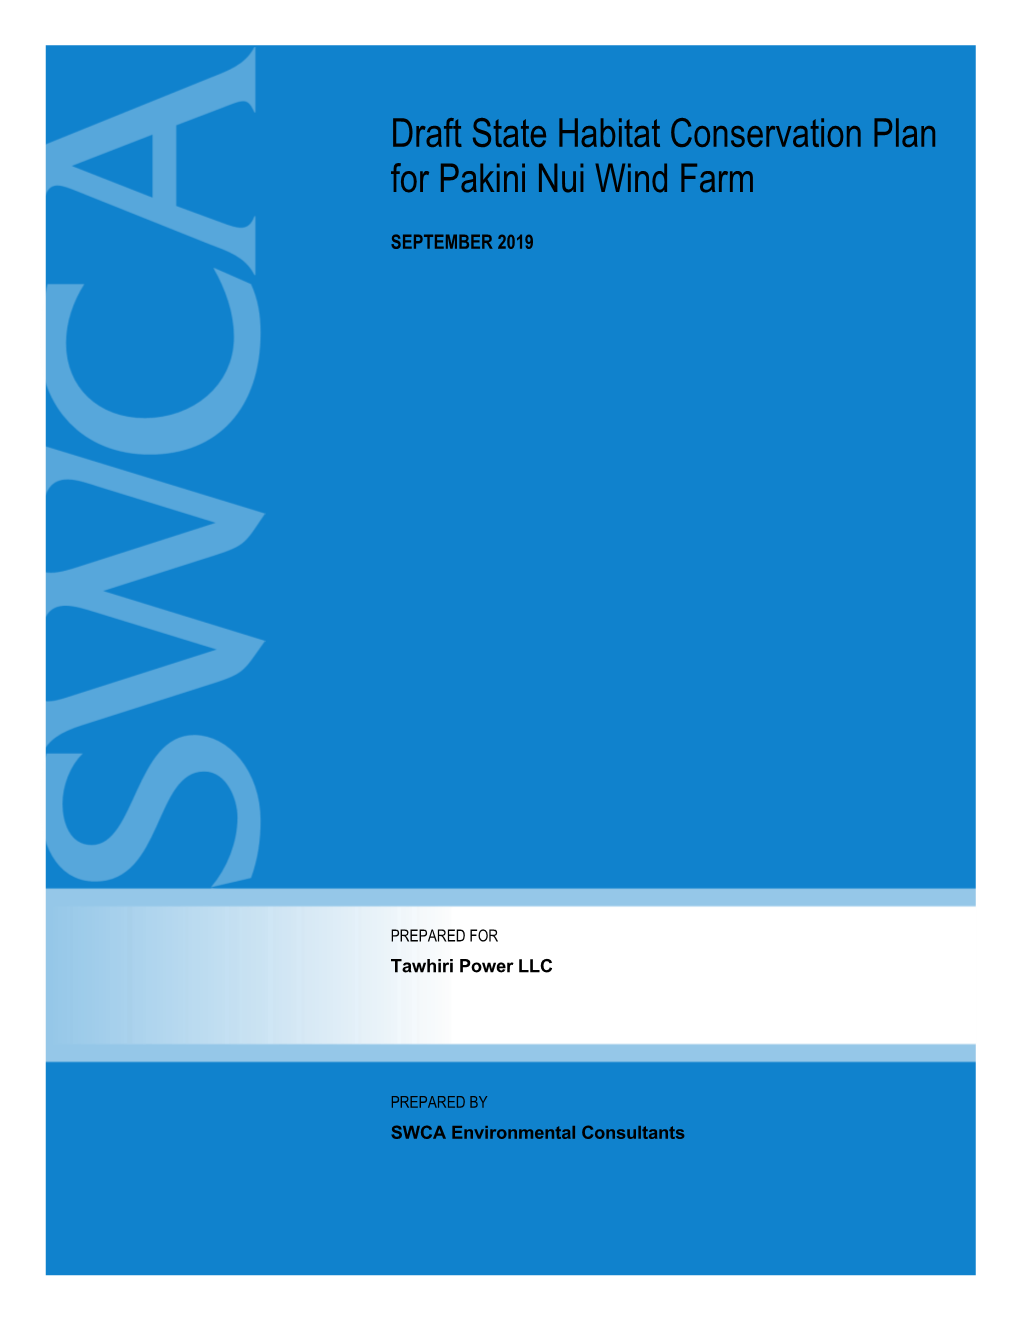 Draft State Habitat Conservation Plan for Pakini Nui Wind Farm